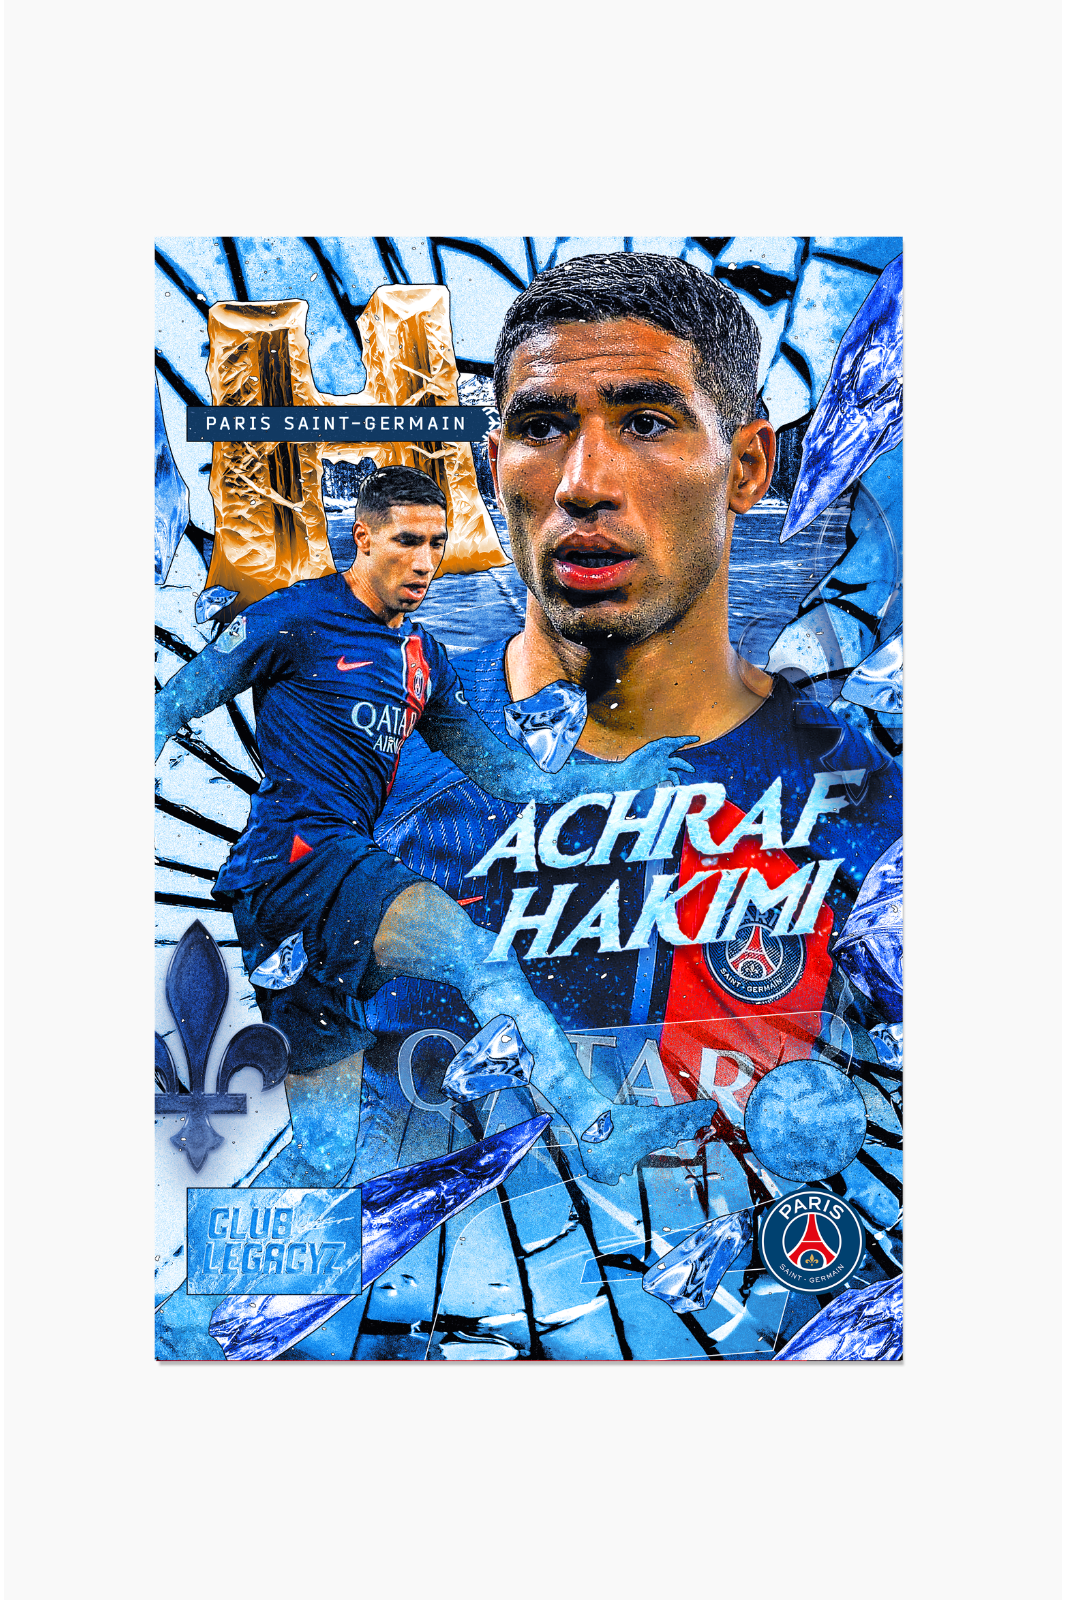 Paris Saint-Germain - Poster Frozen Achraf Hakimi 100 exemplaires